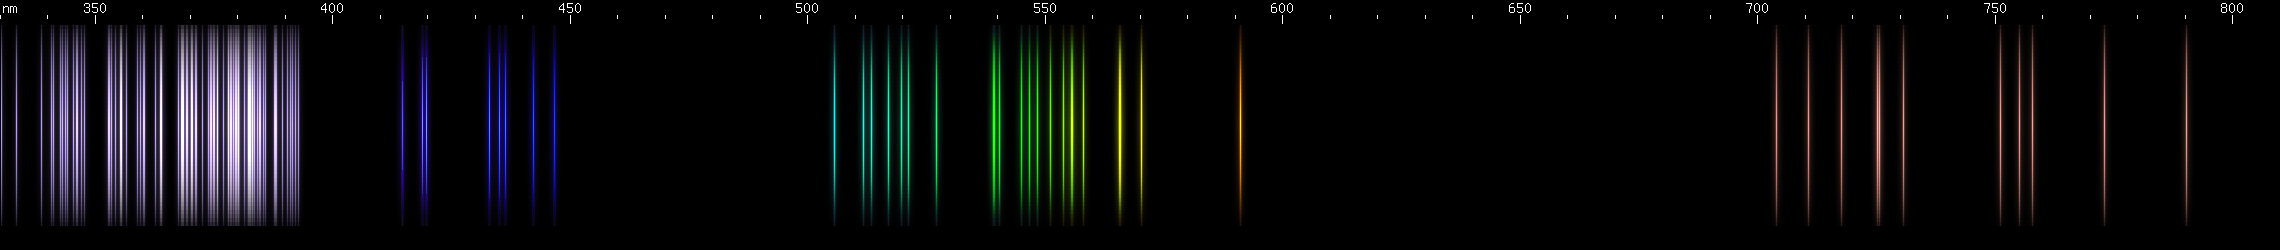 Spectral lines of Berkelium.